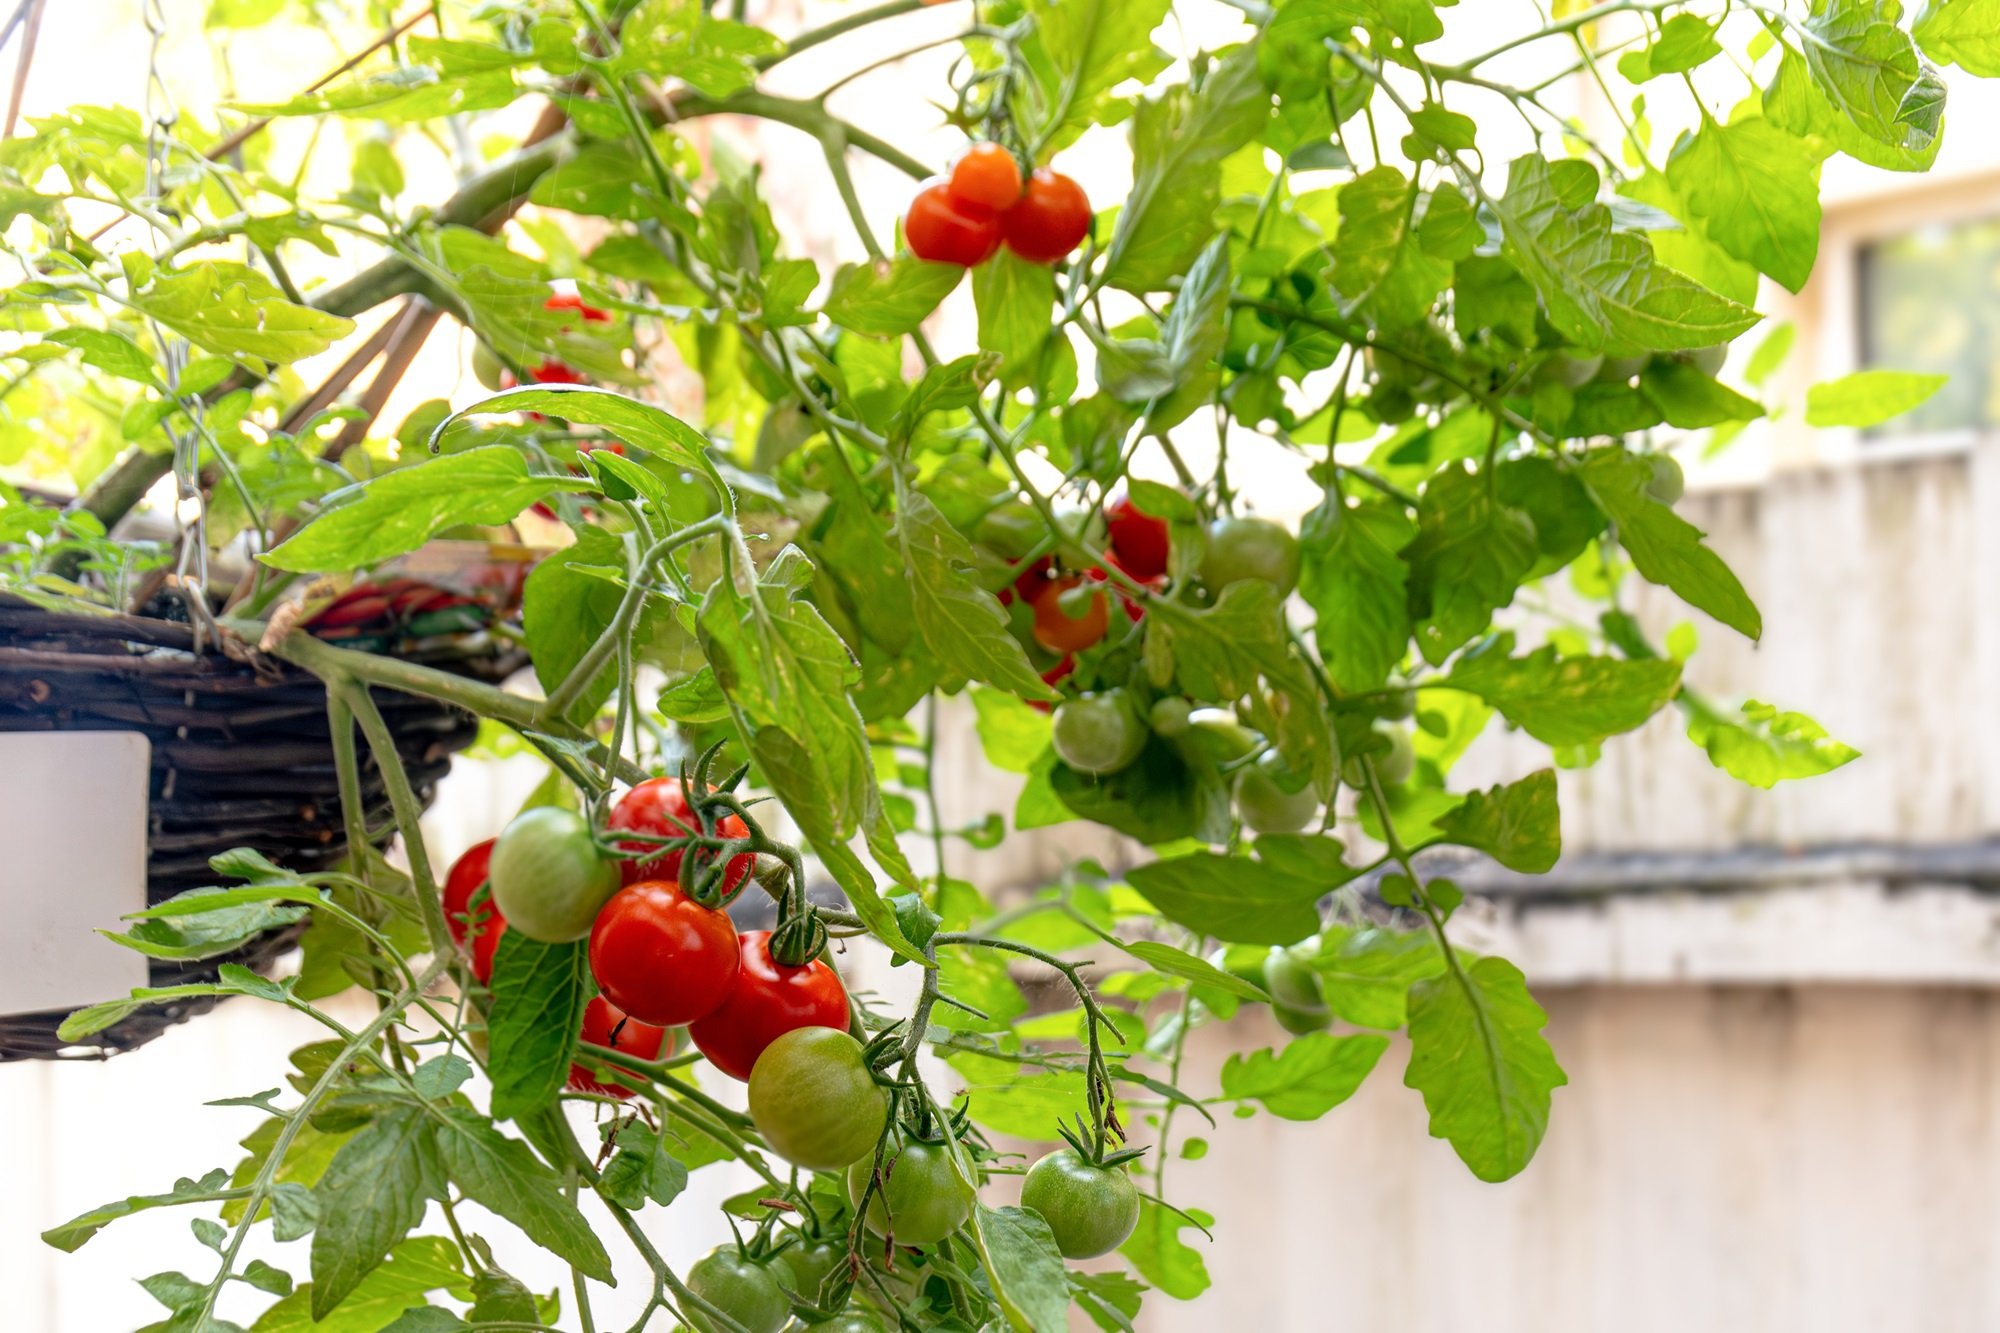 Cherry tomatoes in hanging basket.jpg